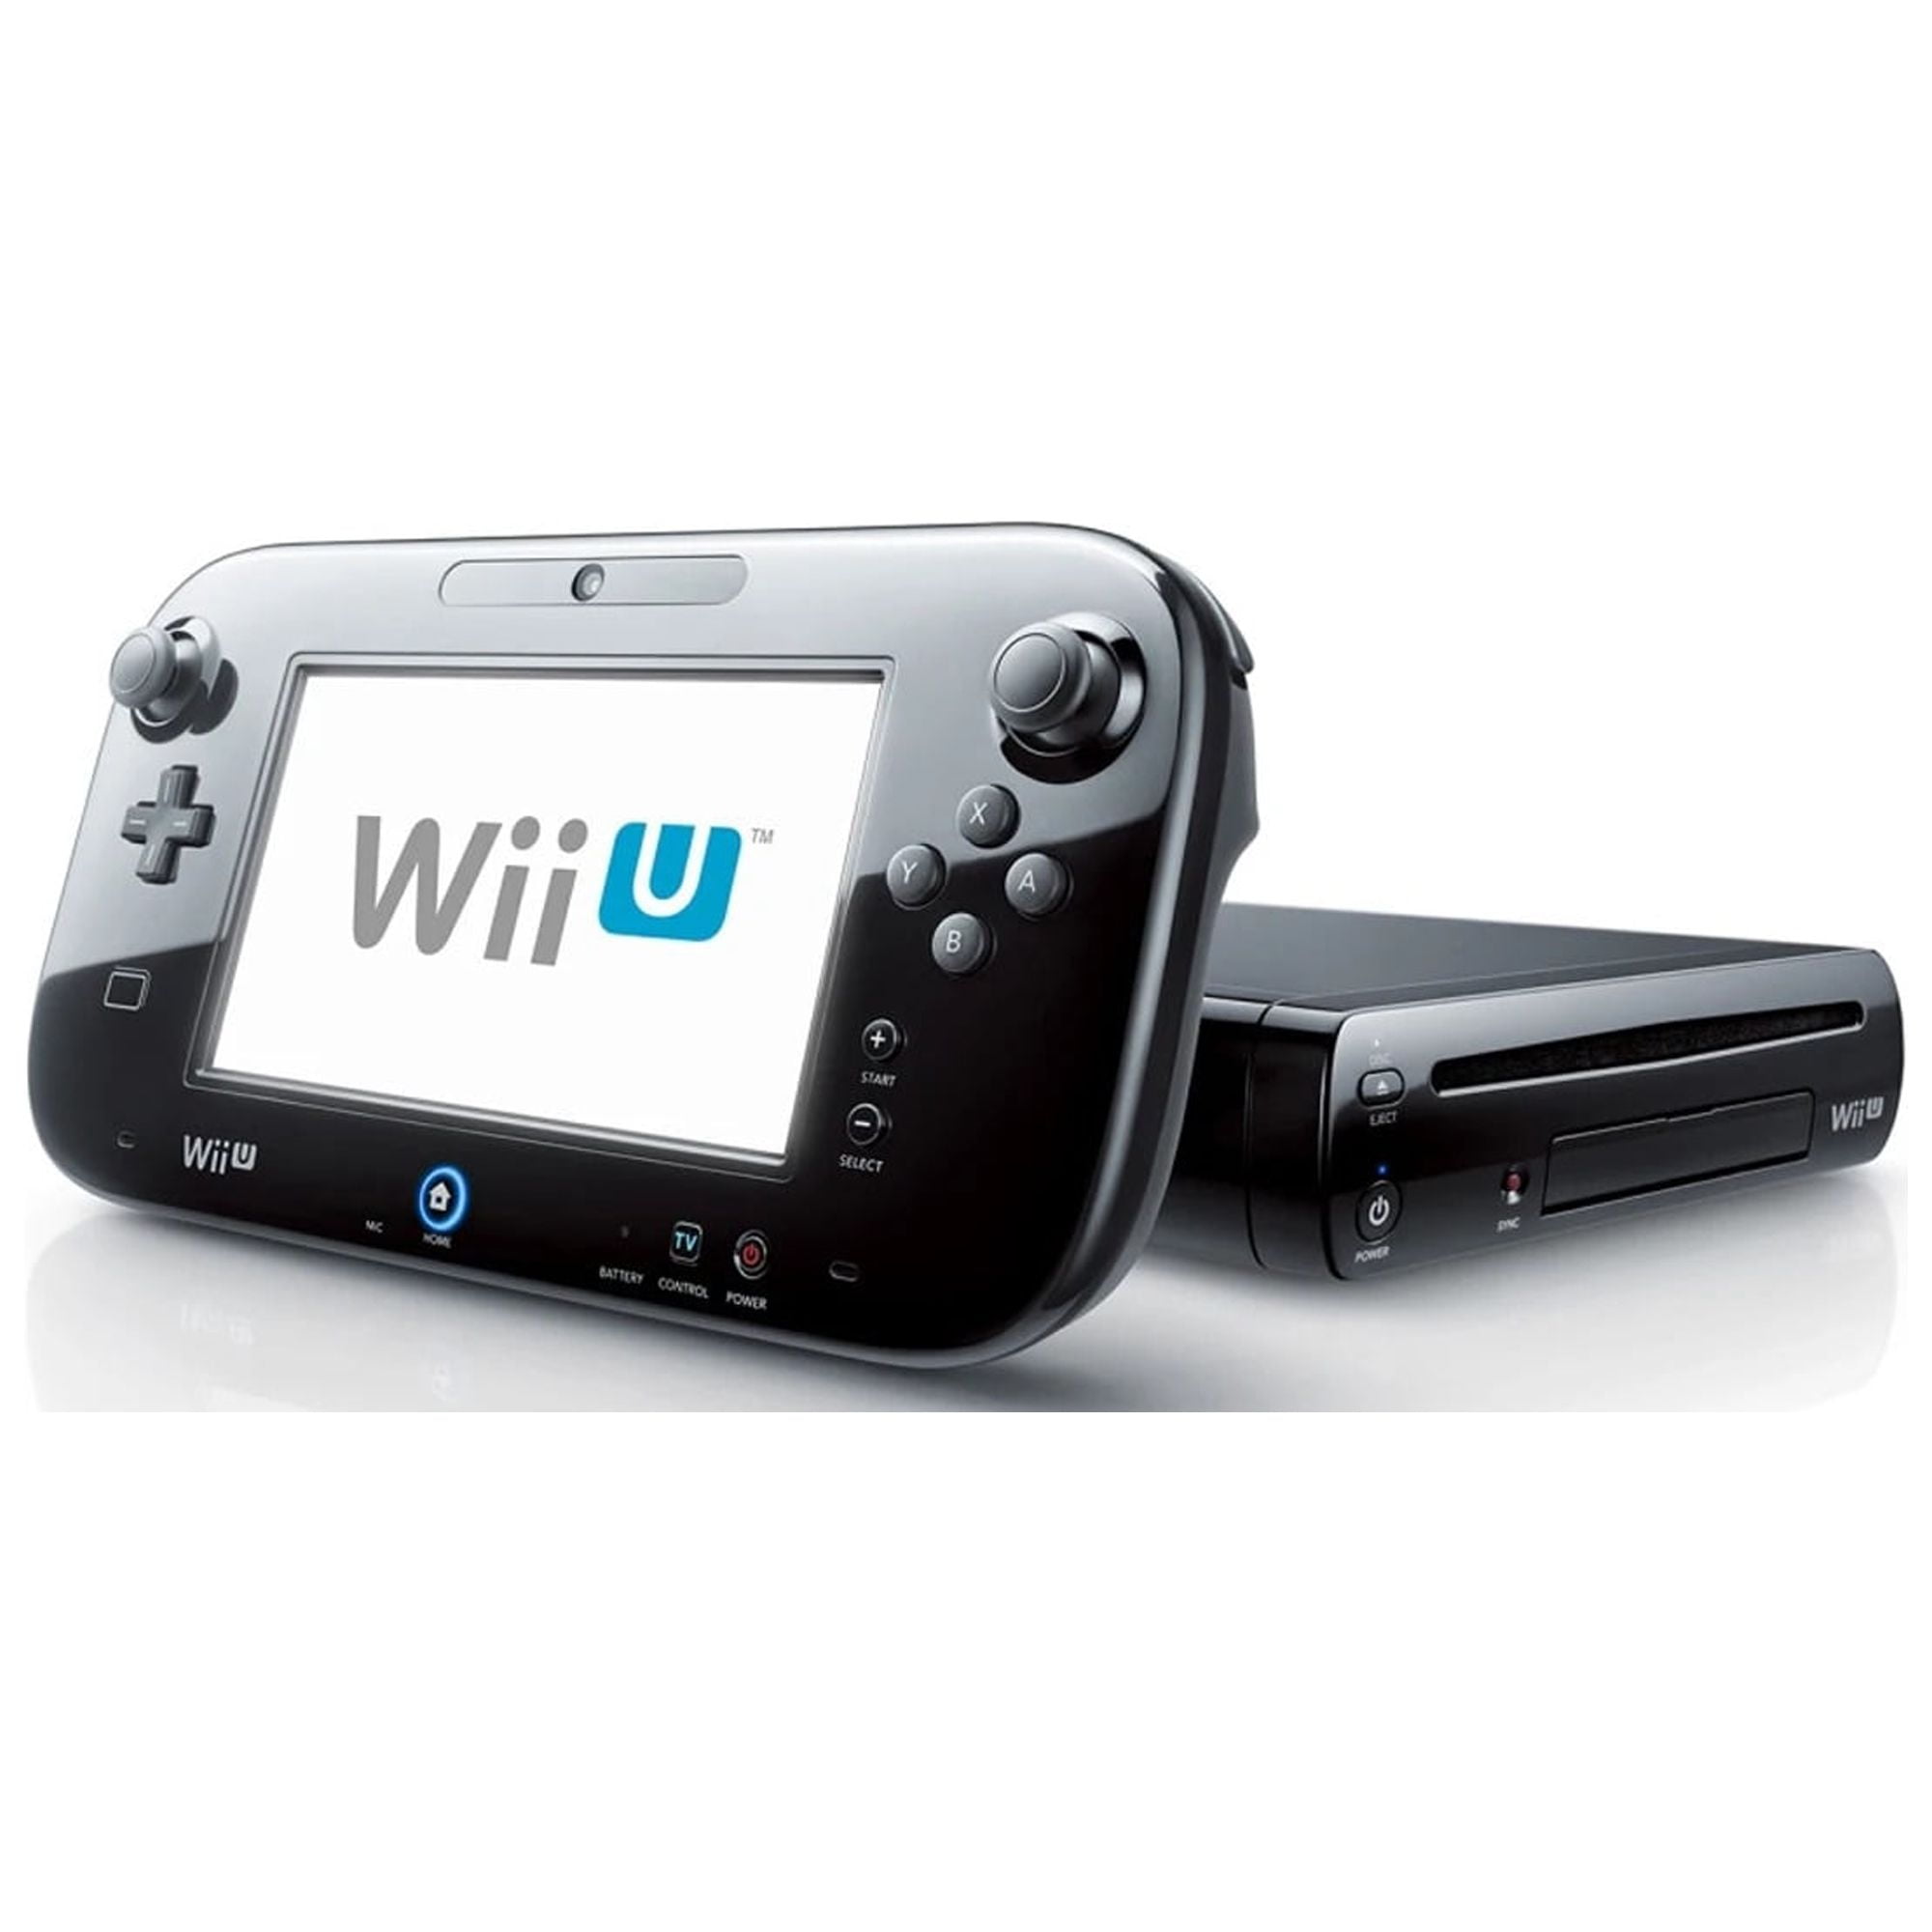 Nintendo Wii U - Super Mario Maker Deluxe Set - game console - Full HD,  1080i, HD, 480p, 480i - black 